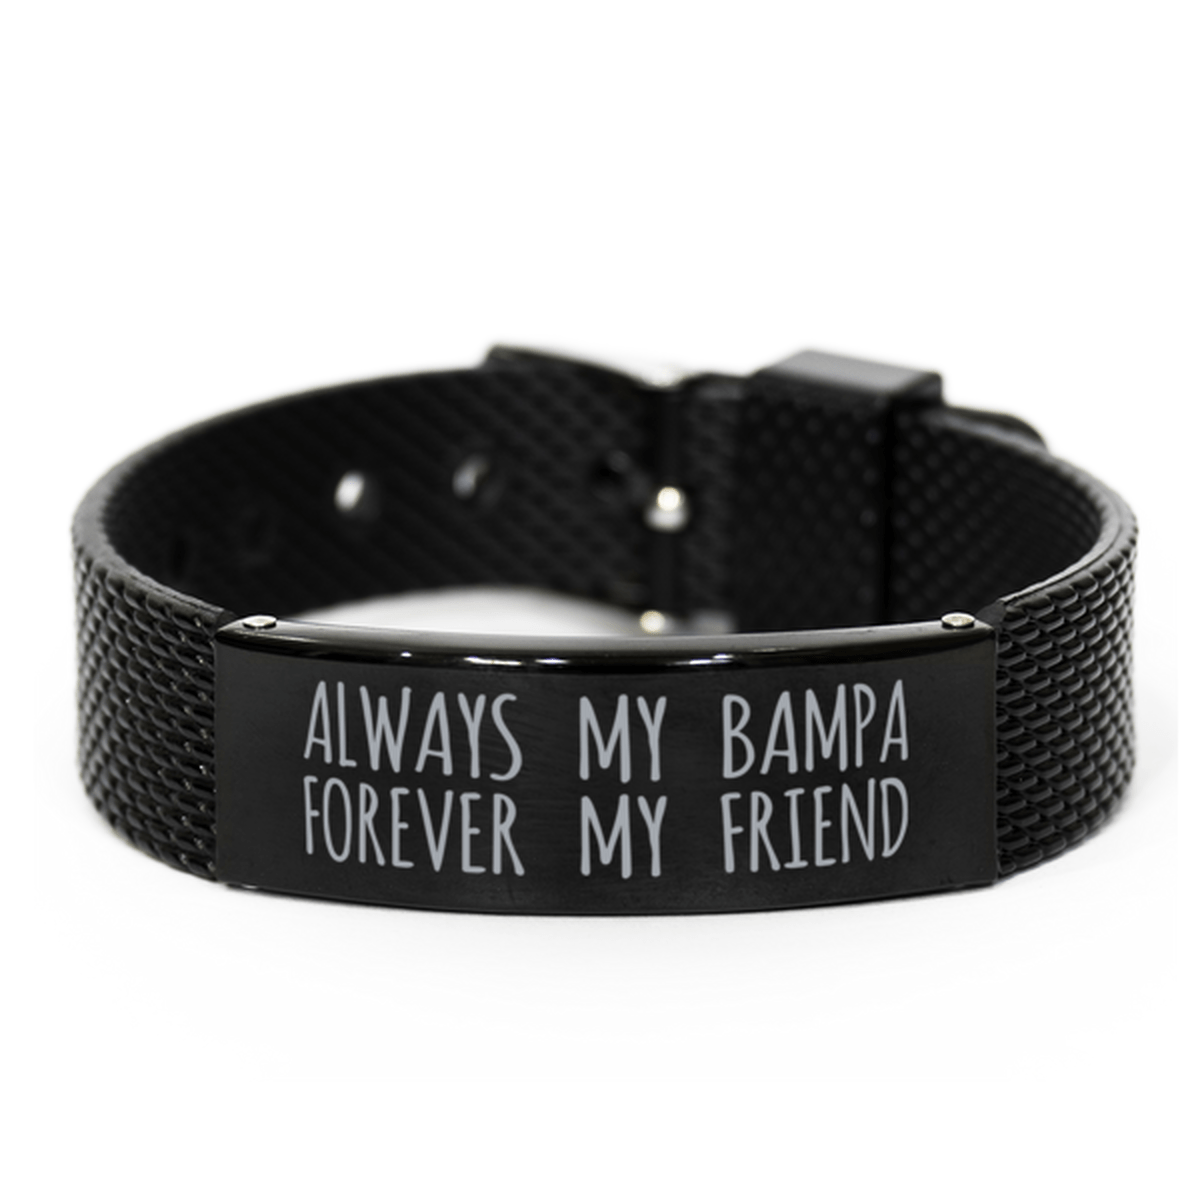 Inspirational Bampa Black Shark Mesh Bracelet, Always My Bampa Forever My Friend, Best Birthday Gifts for Family Friends